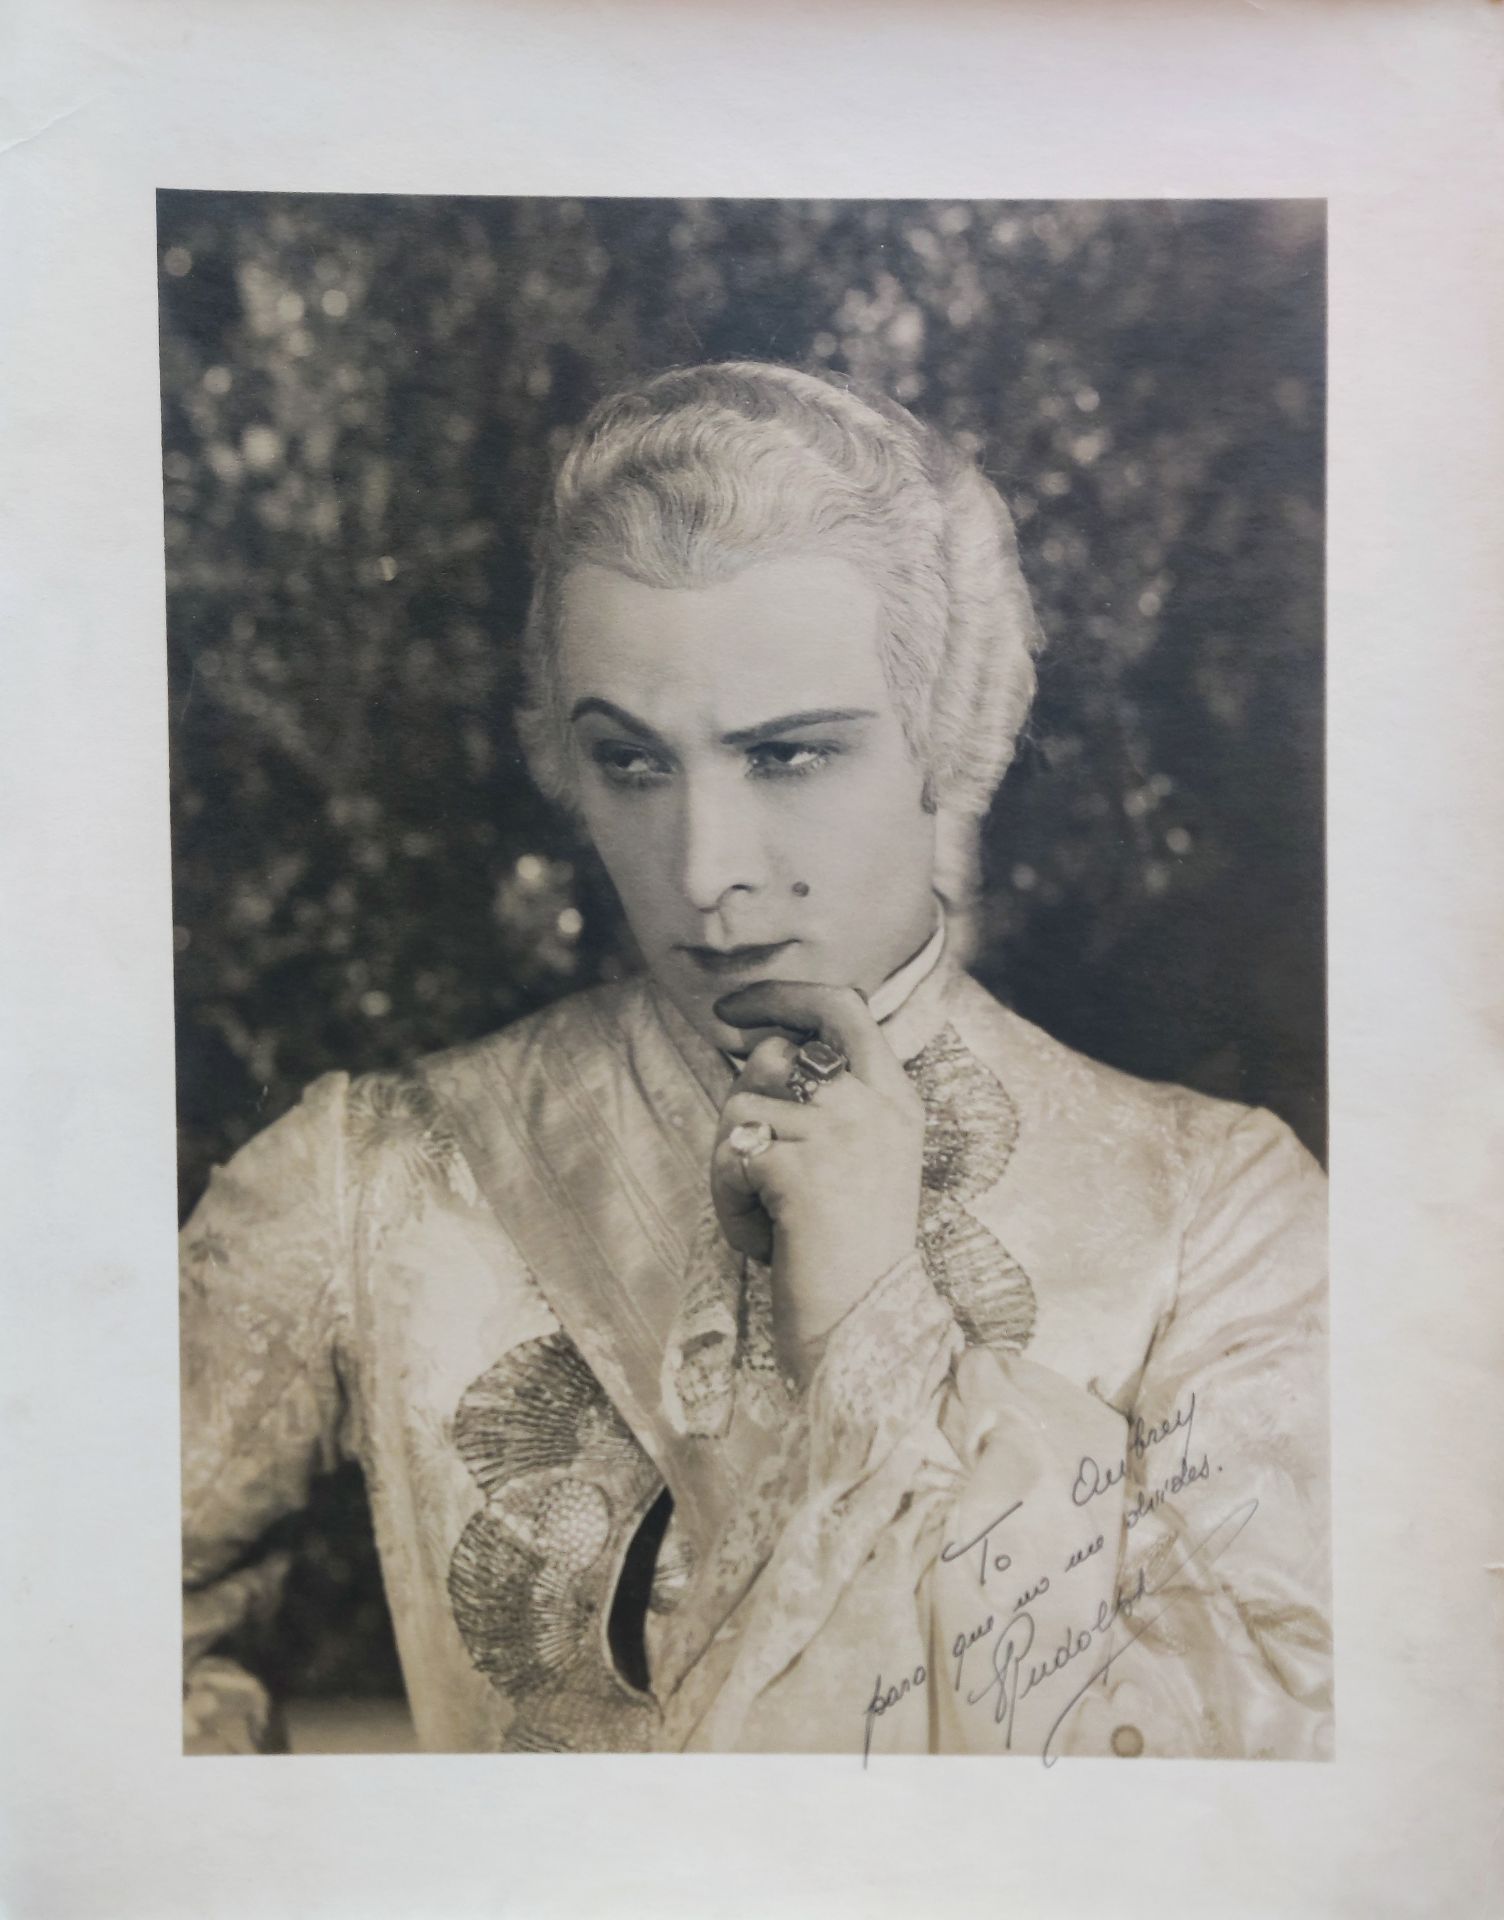 VALENTINO RUDOLPH: (1895-1926) Italian actor, a sex symbol of the 1920s.